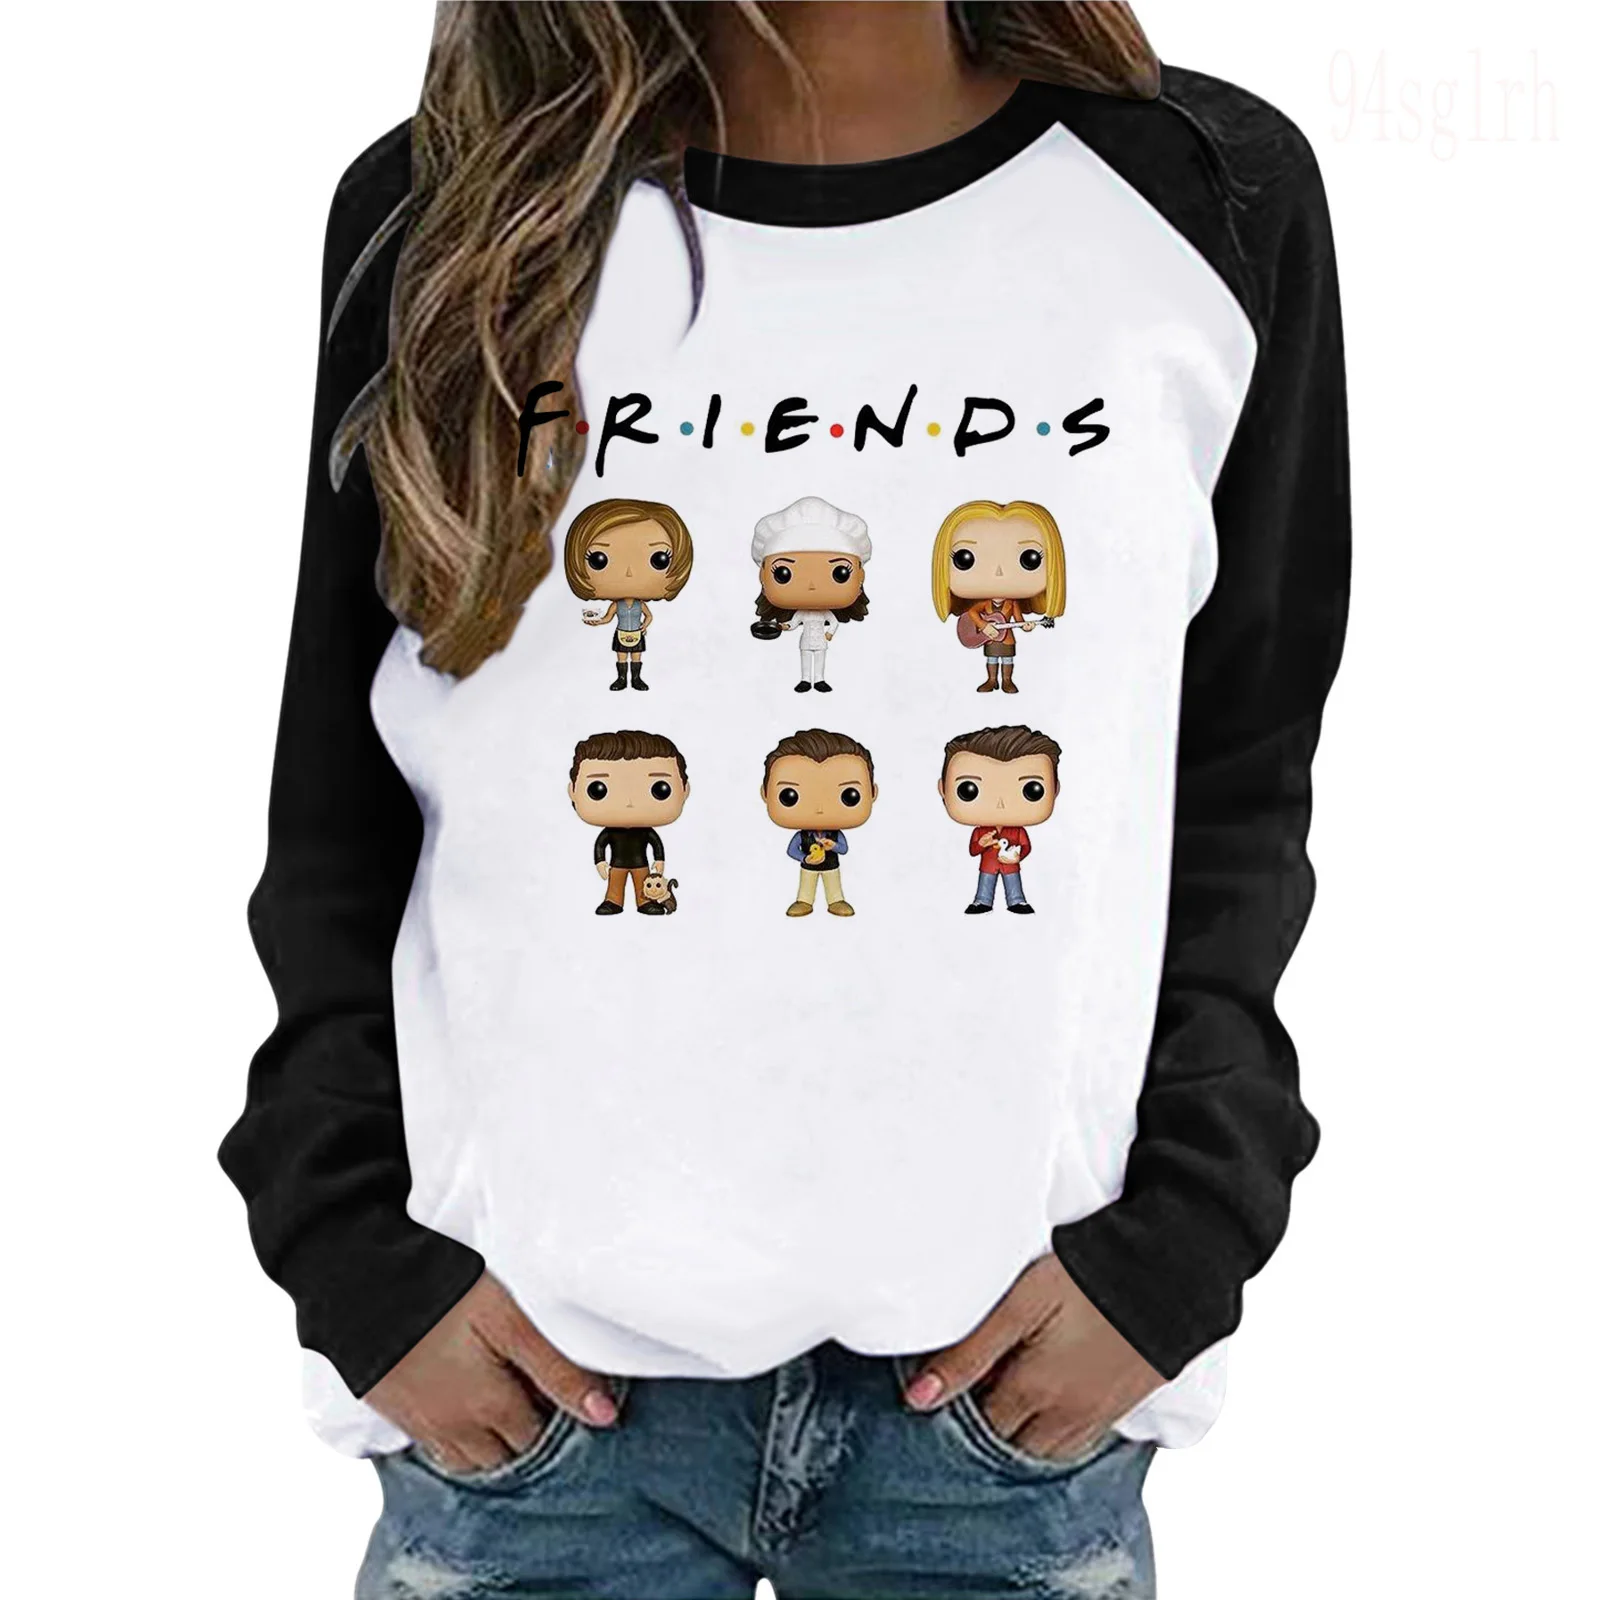 New Friends Tv Show Funny Cartoon T Shirt Women Aesthetic Best Friends Graphic T-shirt Streetwear Long Sleeve Tshirt Tops Female graphic tees